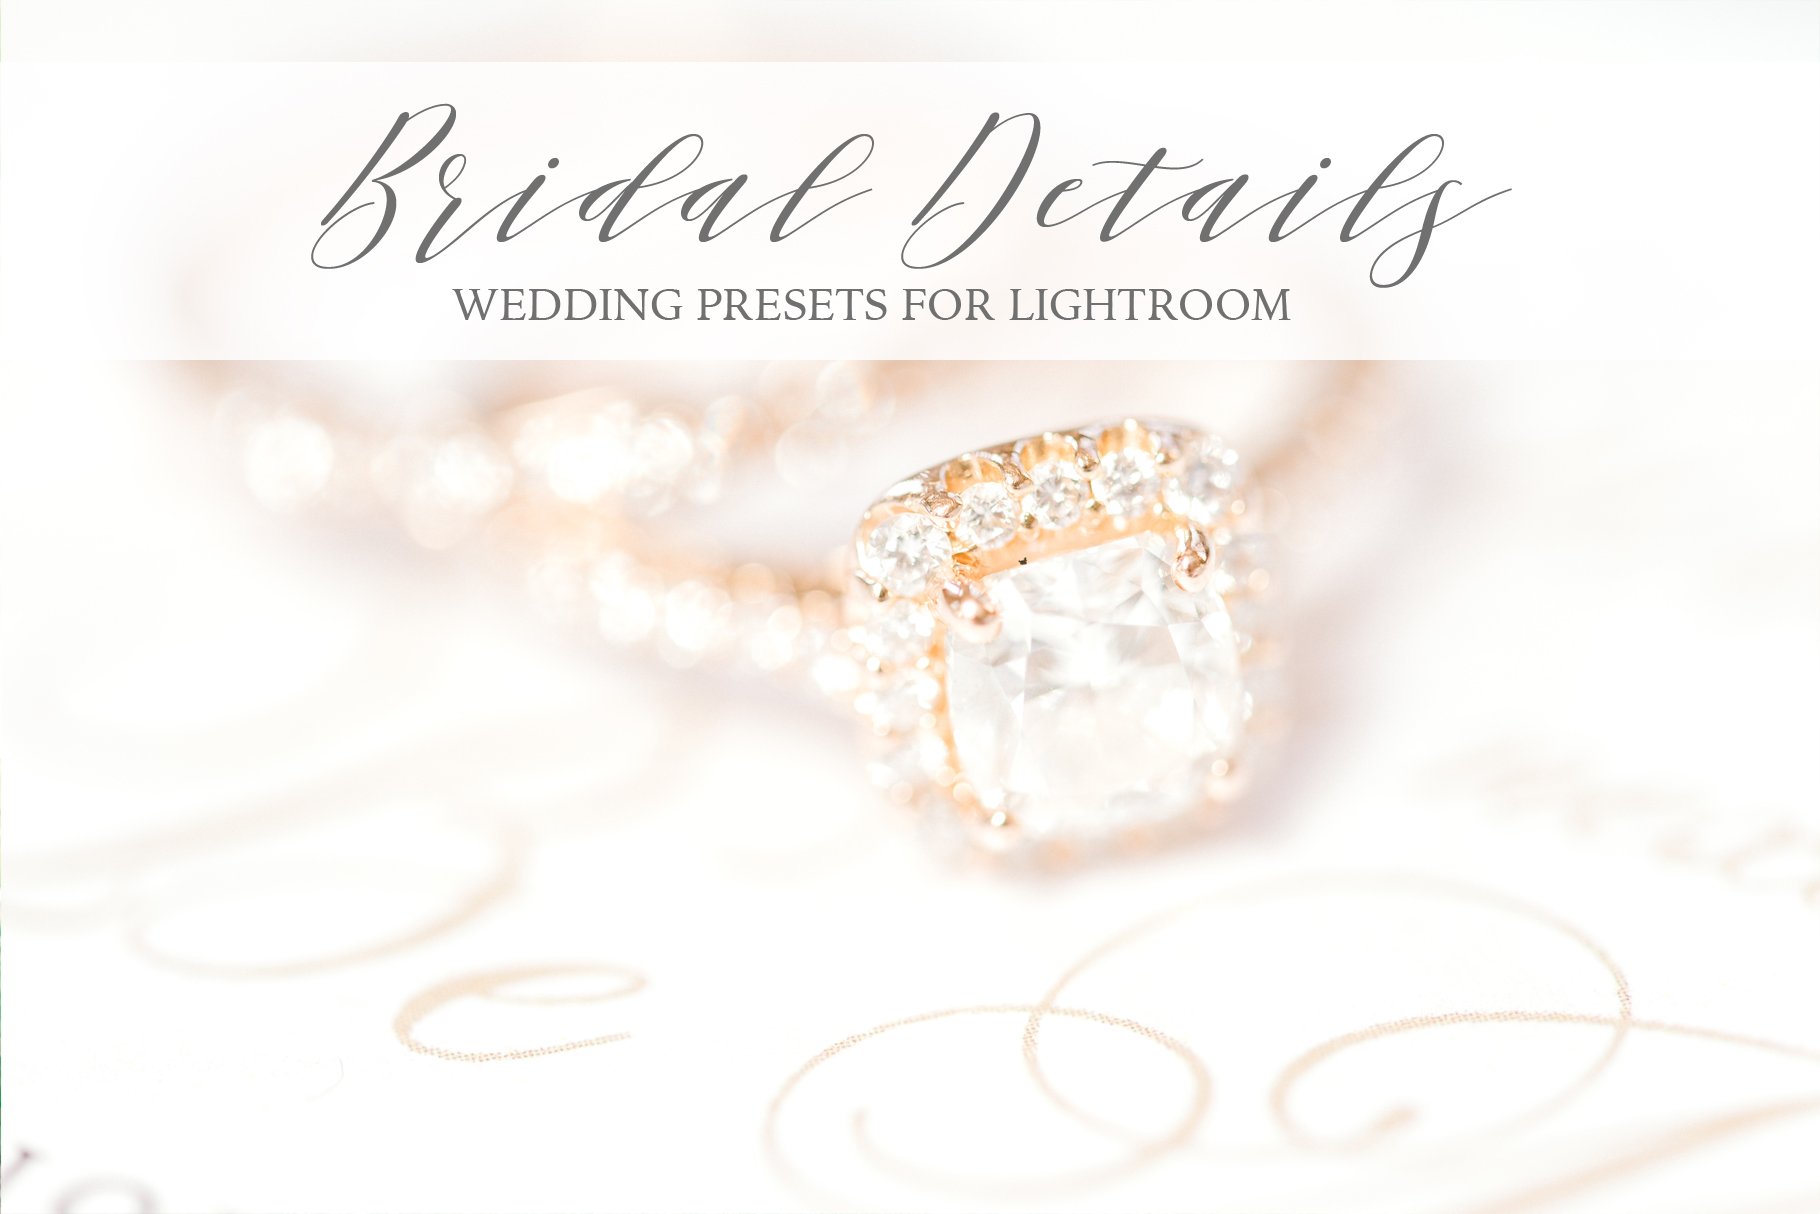 Bridal Details & Wedding Presetscover image.